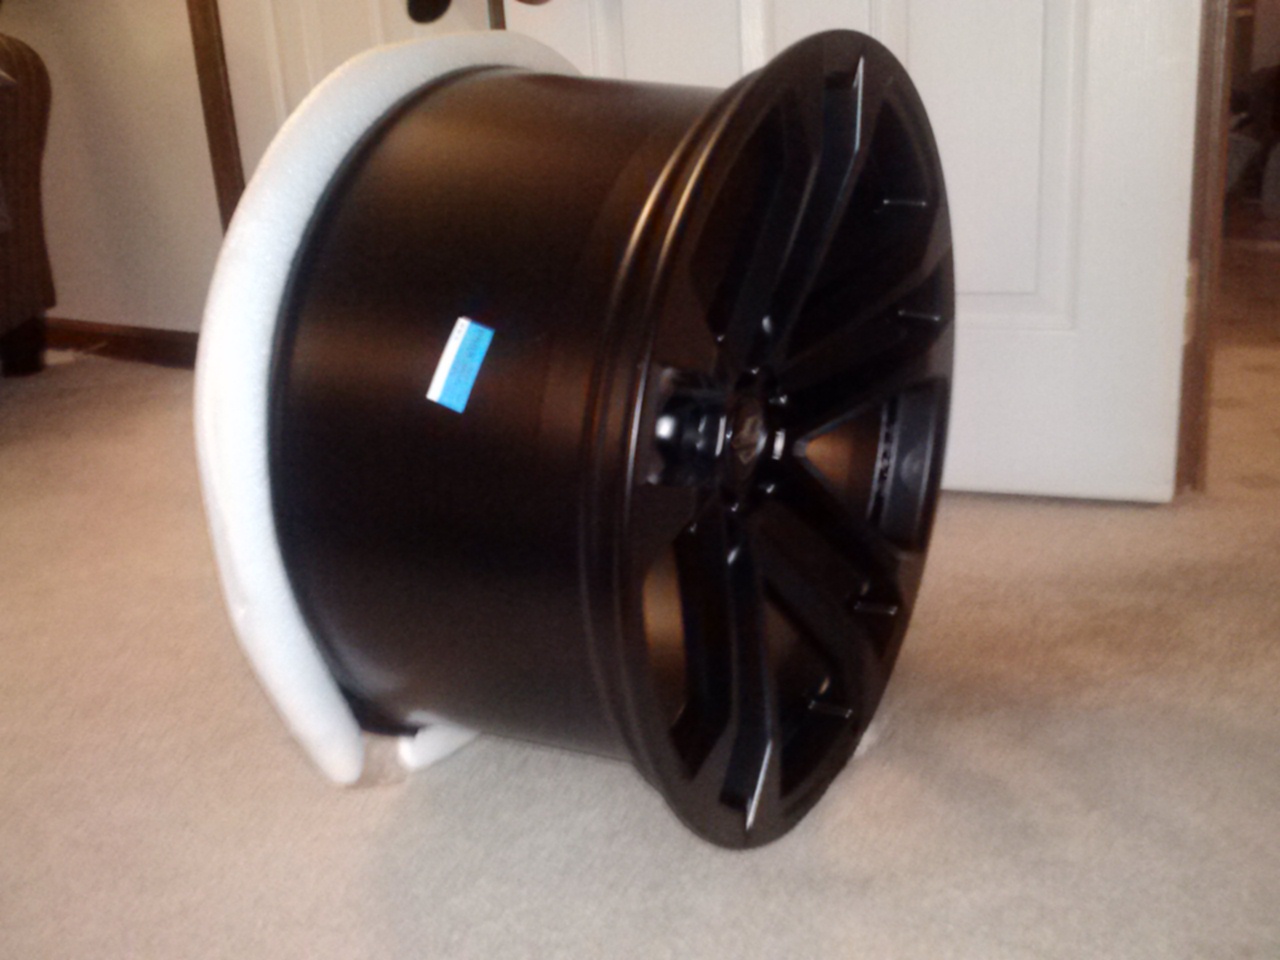 New ZL1 replica wheels arrived on 10/5/15. 20x10, 20x11.